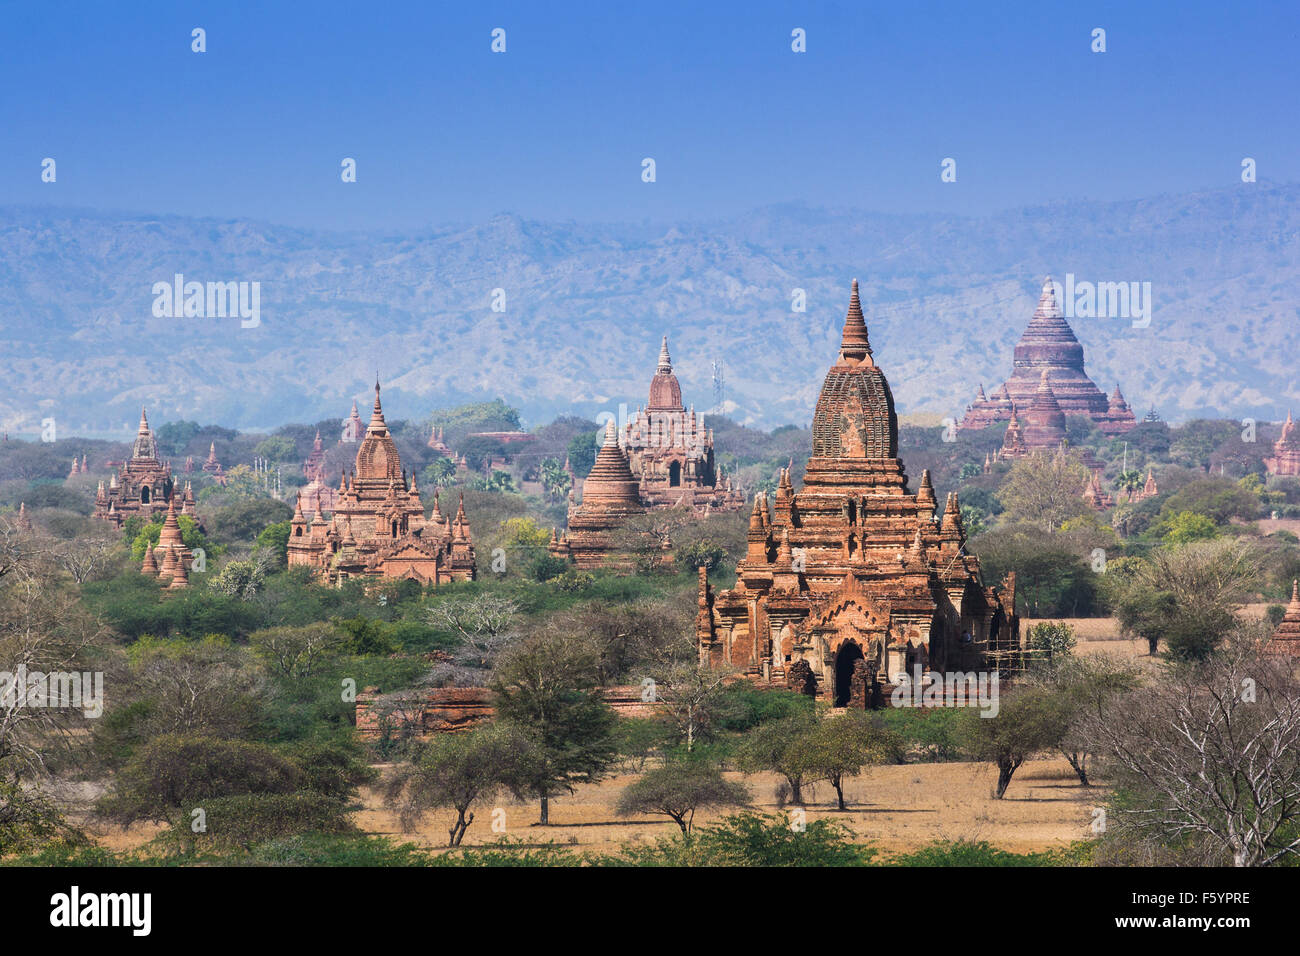 Temples in Bagan, Land of Pagoda, Myanmar Stock Photo